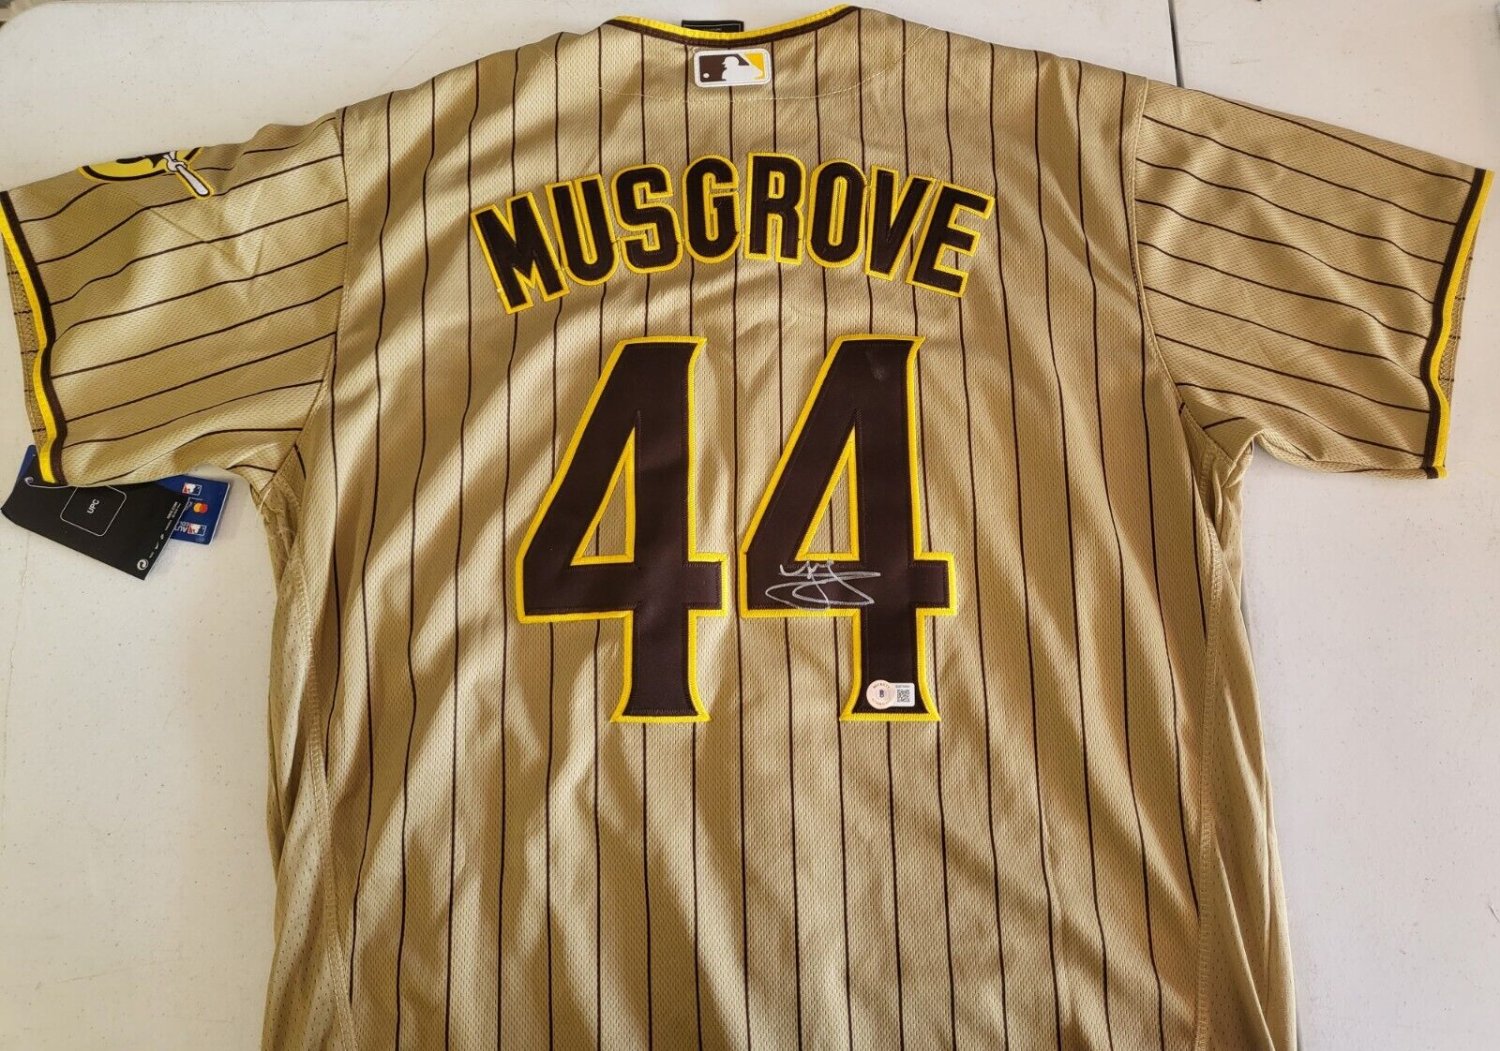 Joe Musgrove Autographed Signed #44 San Diego Padres Autograph